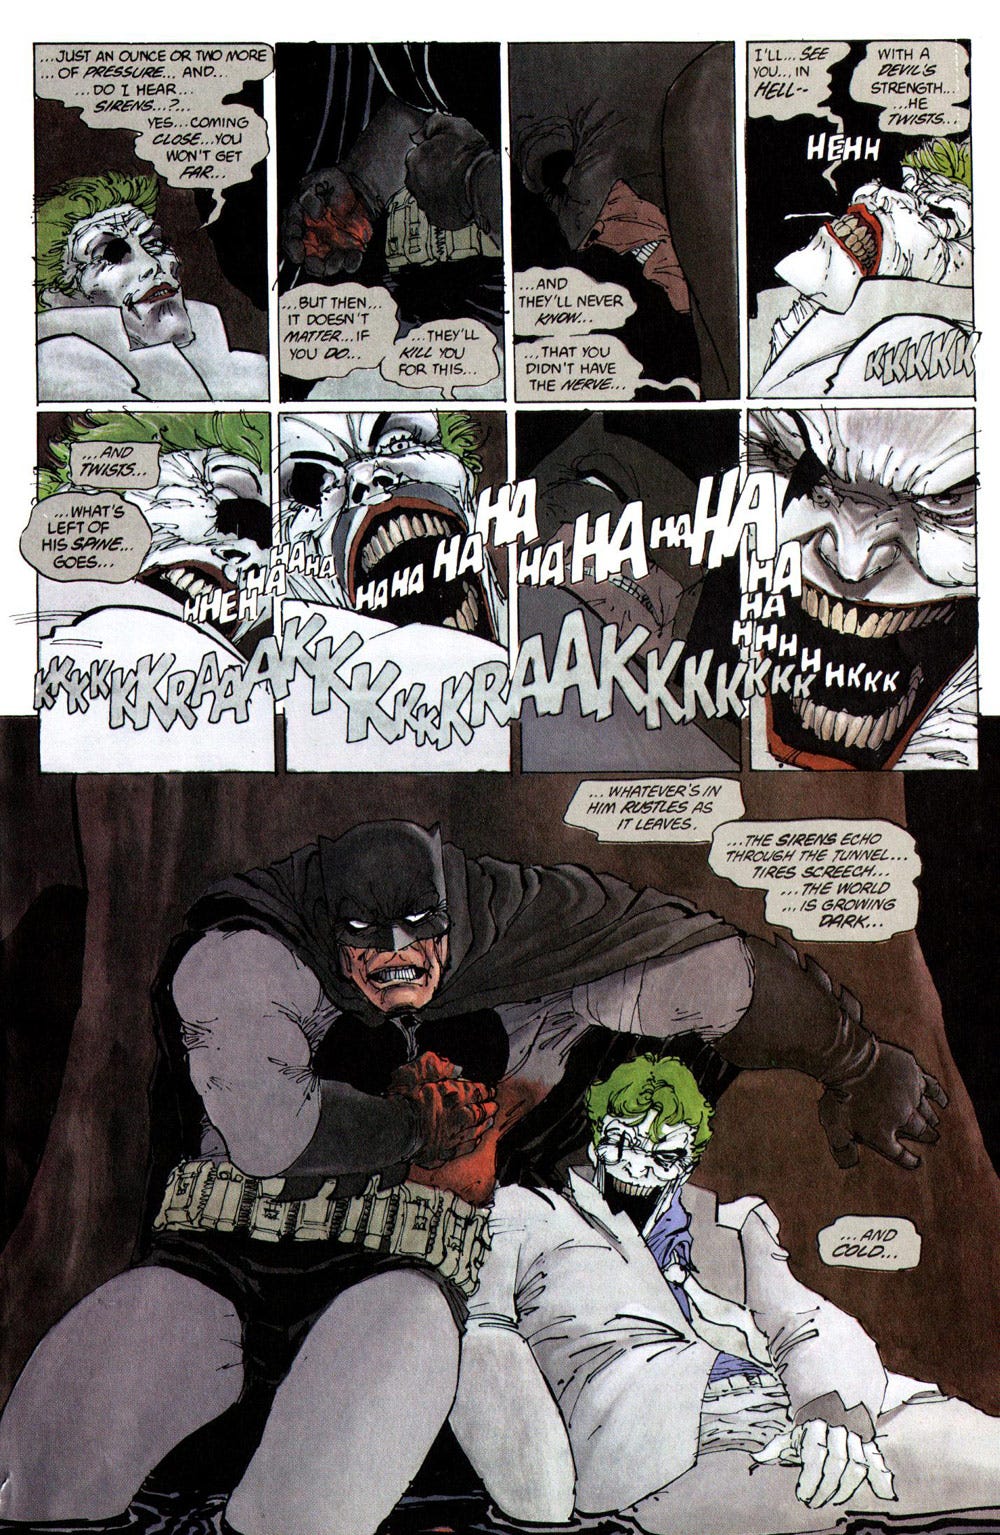 The Joker Simply Wants Batman to Kill Him | by Mike “DJ” Pizzo | Medium